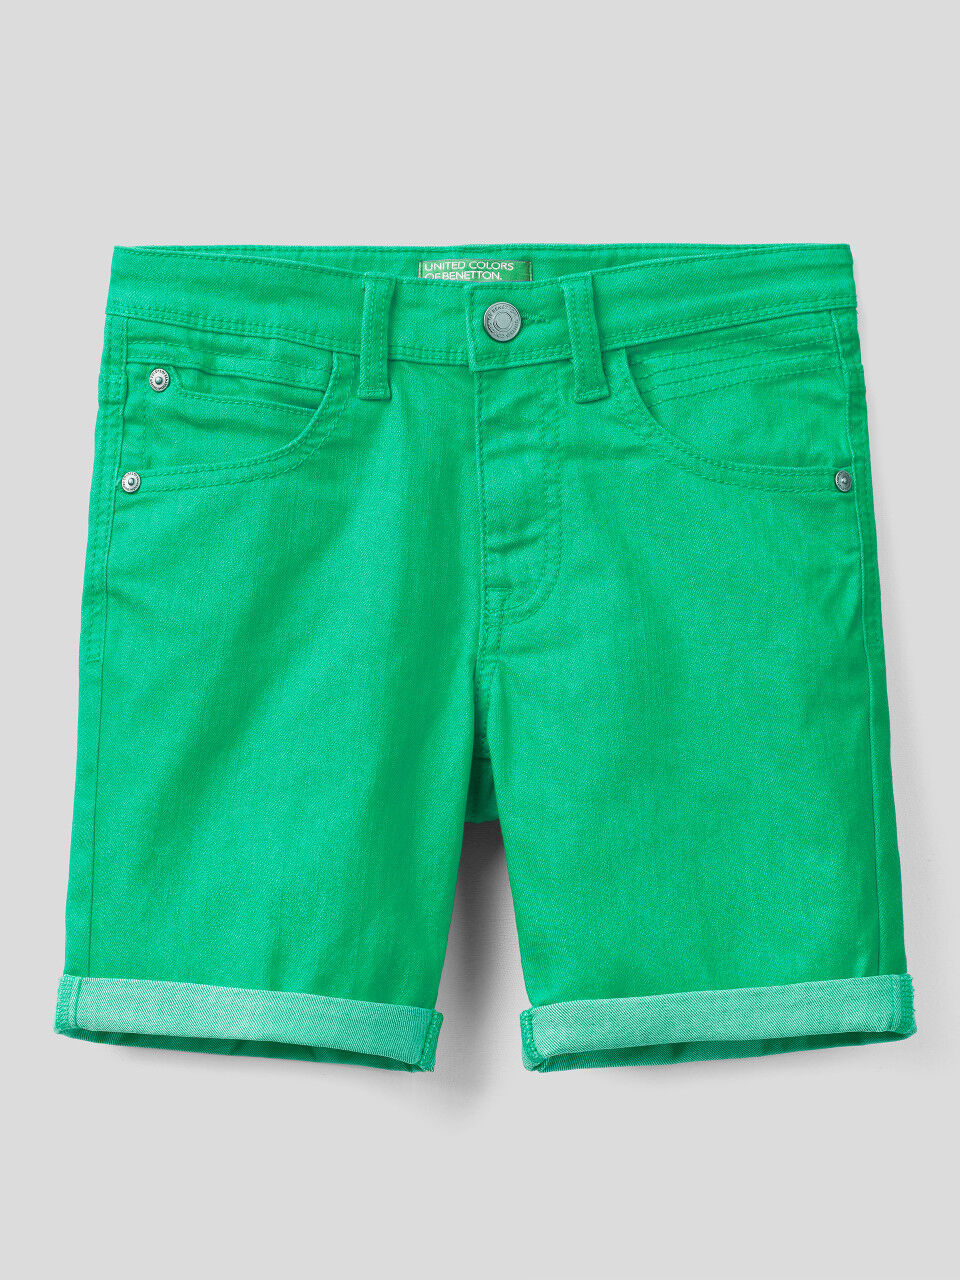 United Colors of Benetton Short Pantalones Cortos para Bebés 